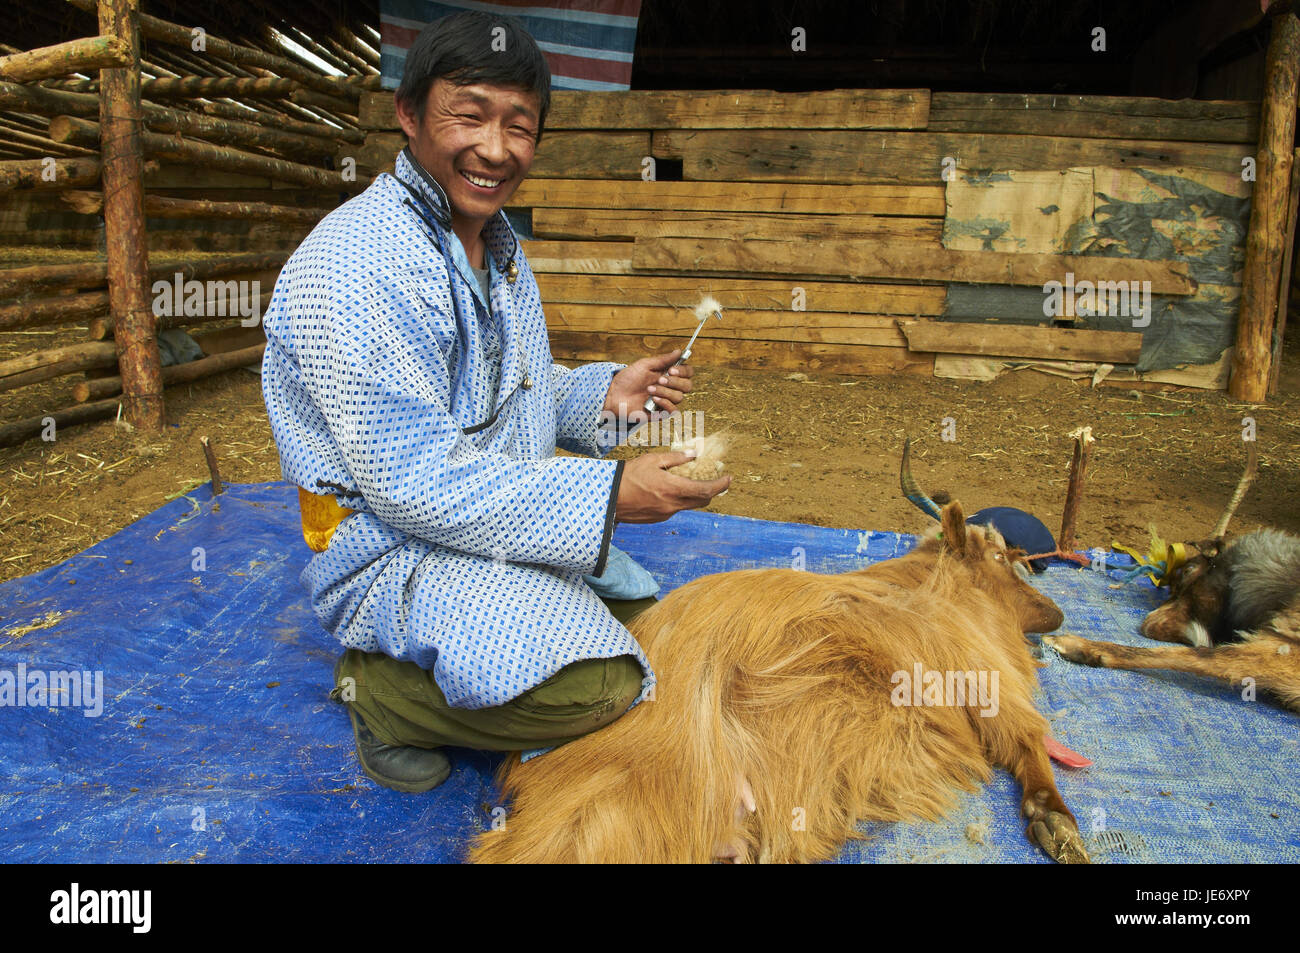 Mongolia, provincia di Arkhangai, nomade, capre cashmere, pettine, lana, pelo di capra, cashmere, Foto Stock